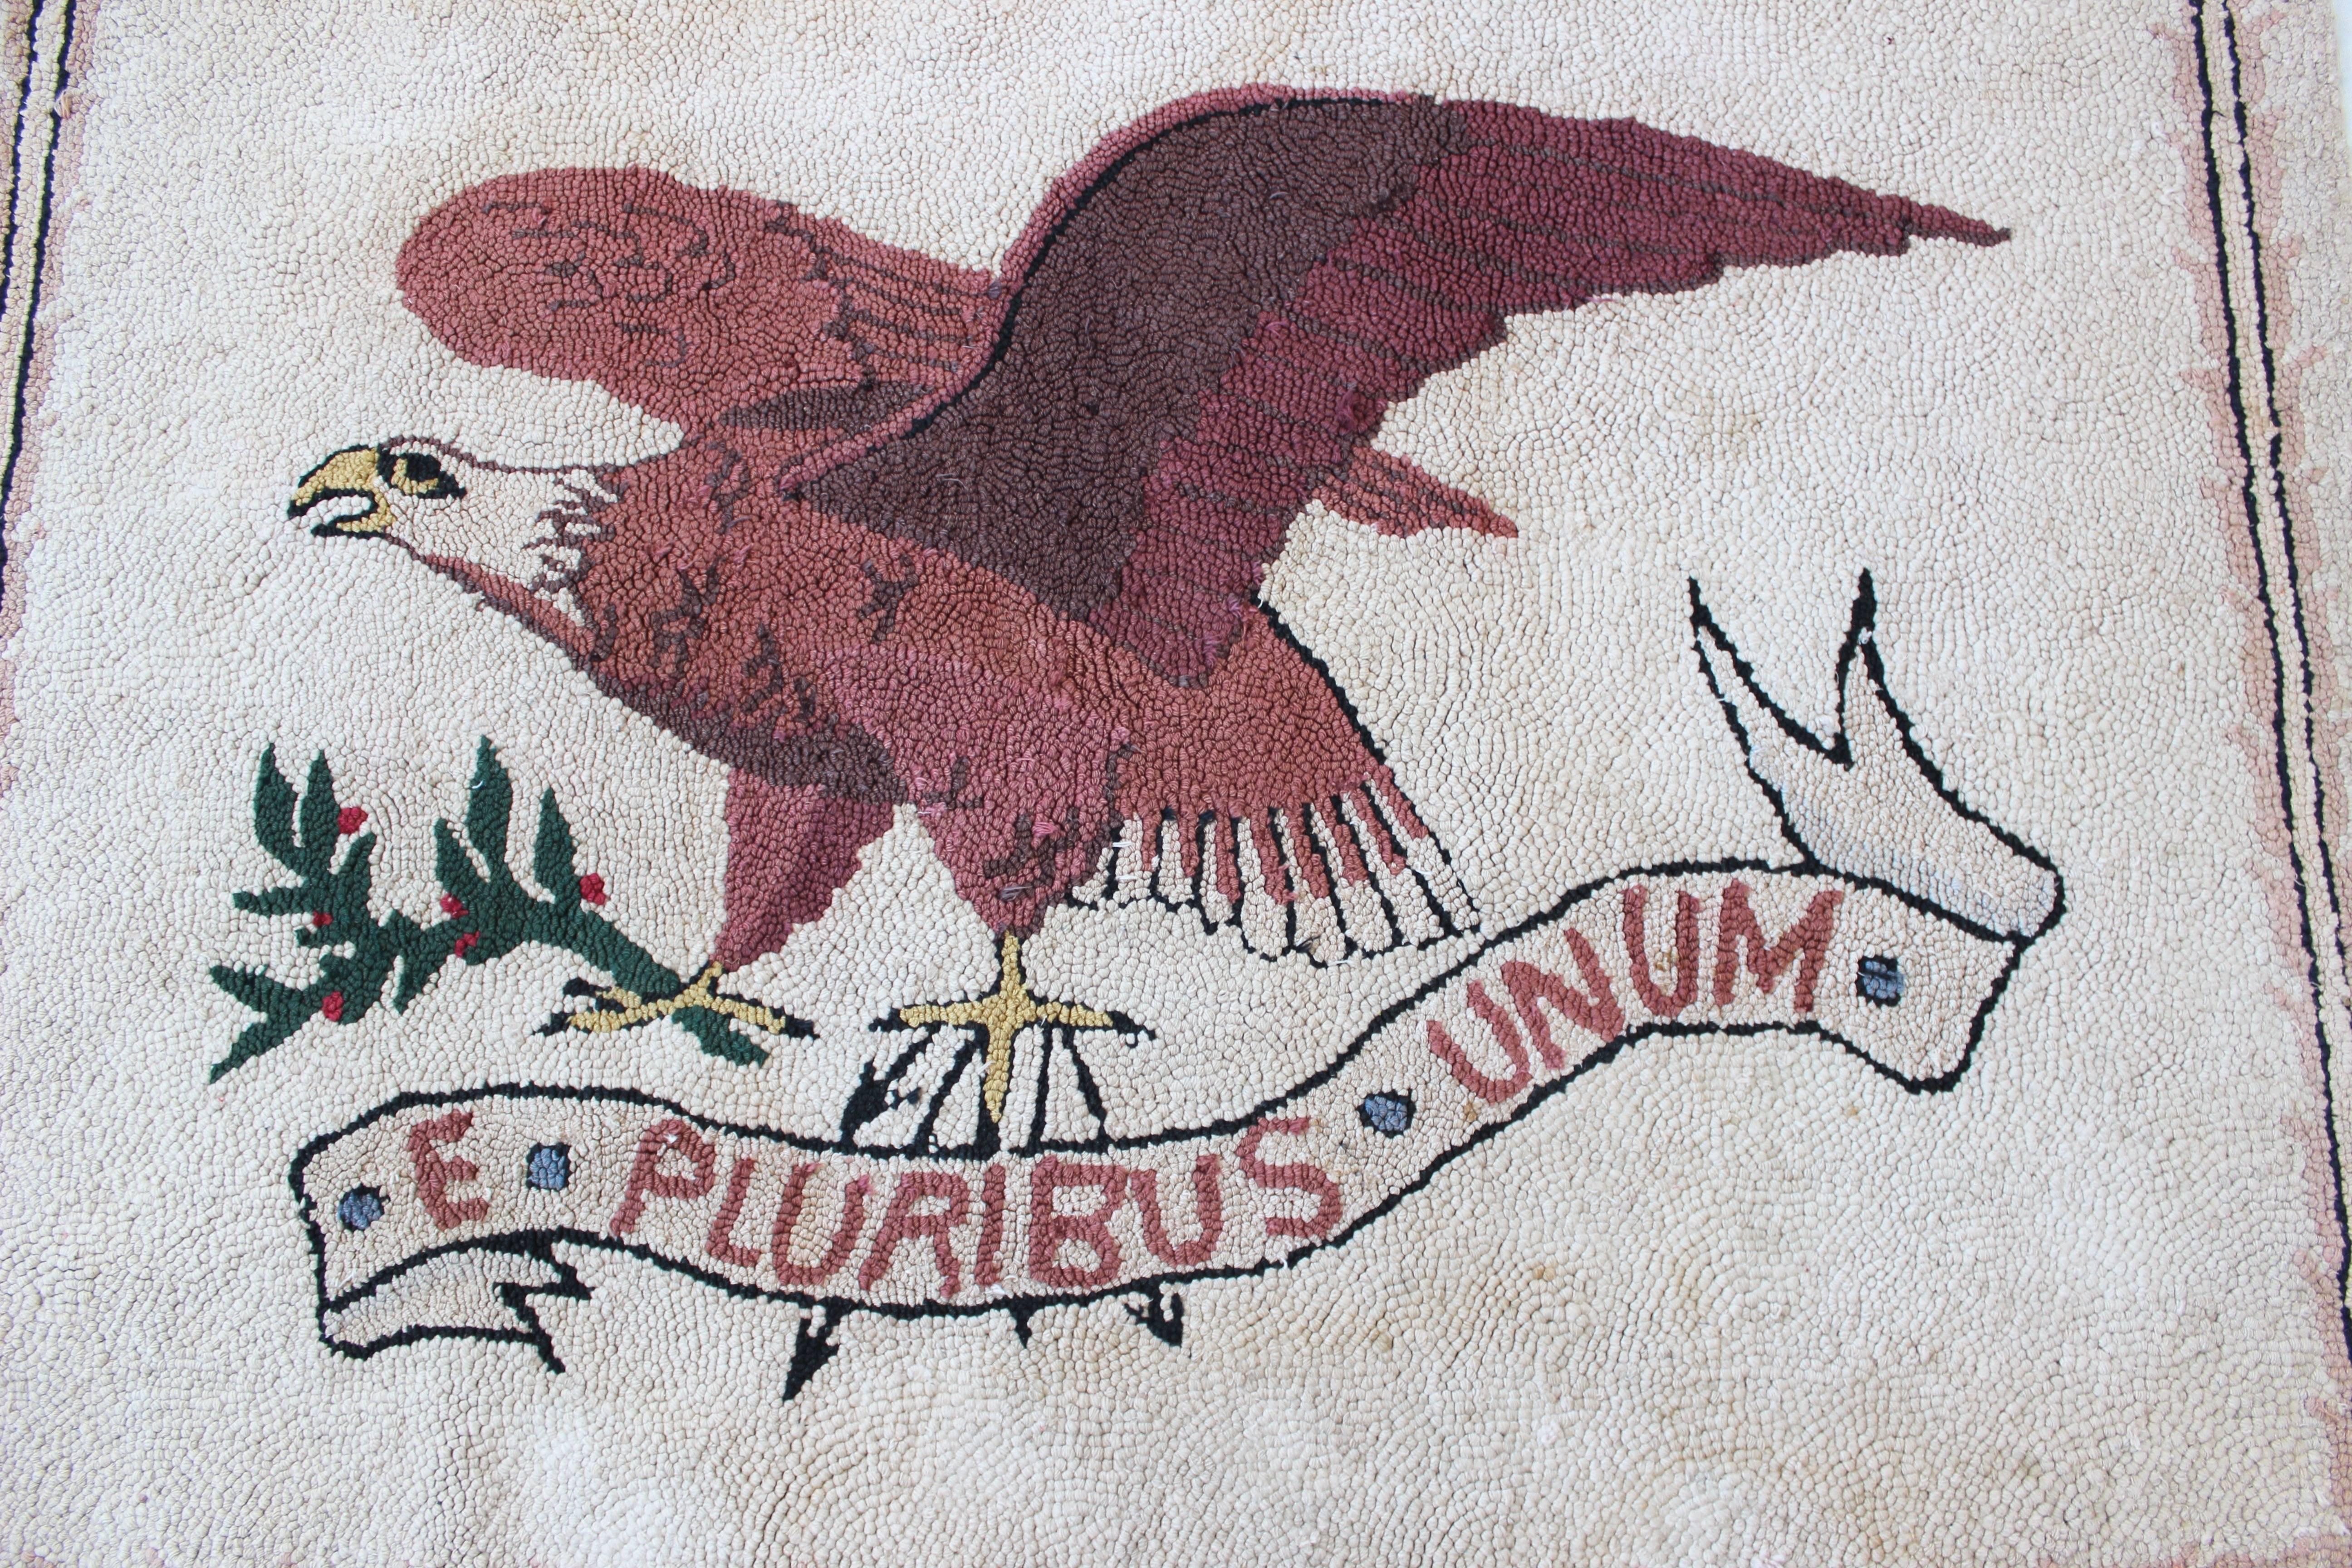 Patriotic Eagle Hook Rug with the motto of the US "E PLURIBUS UNUM".